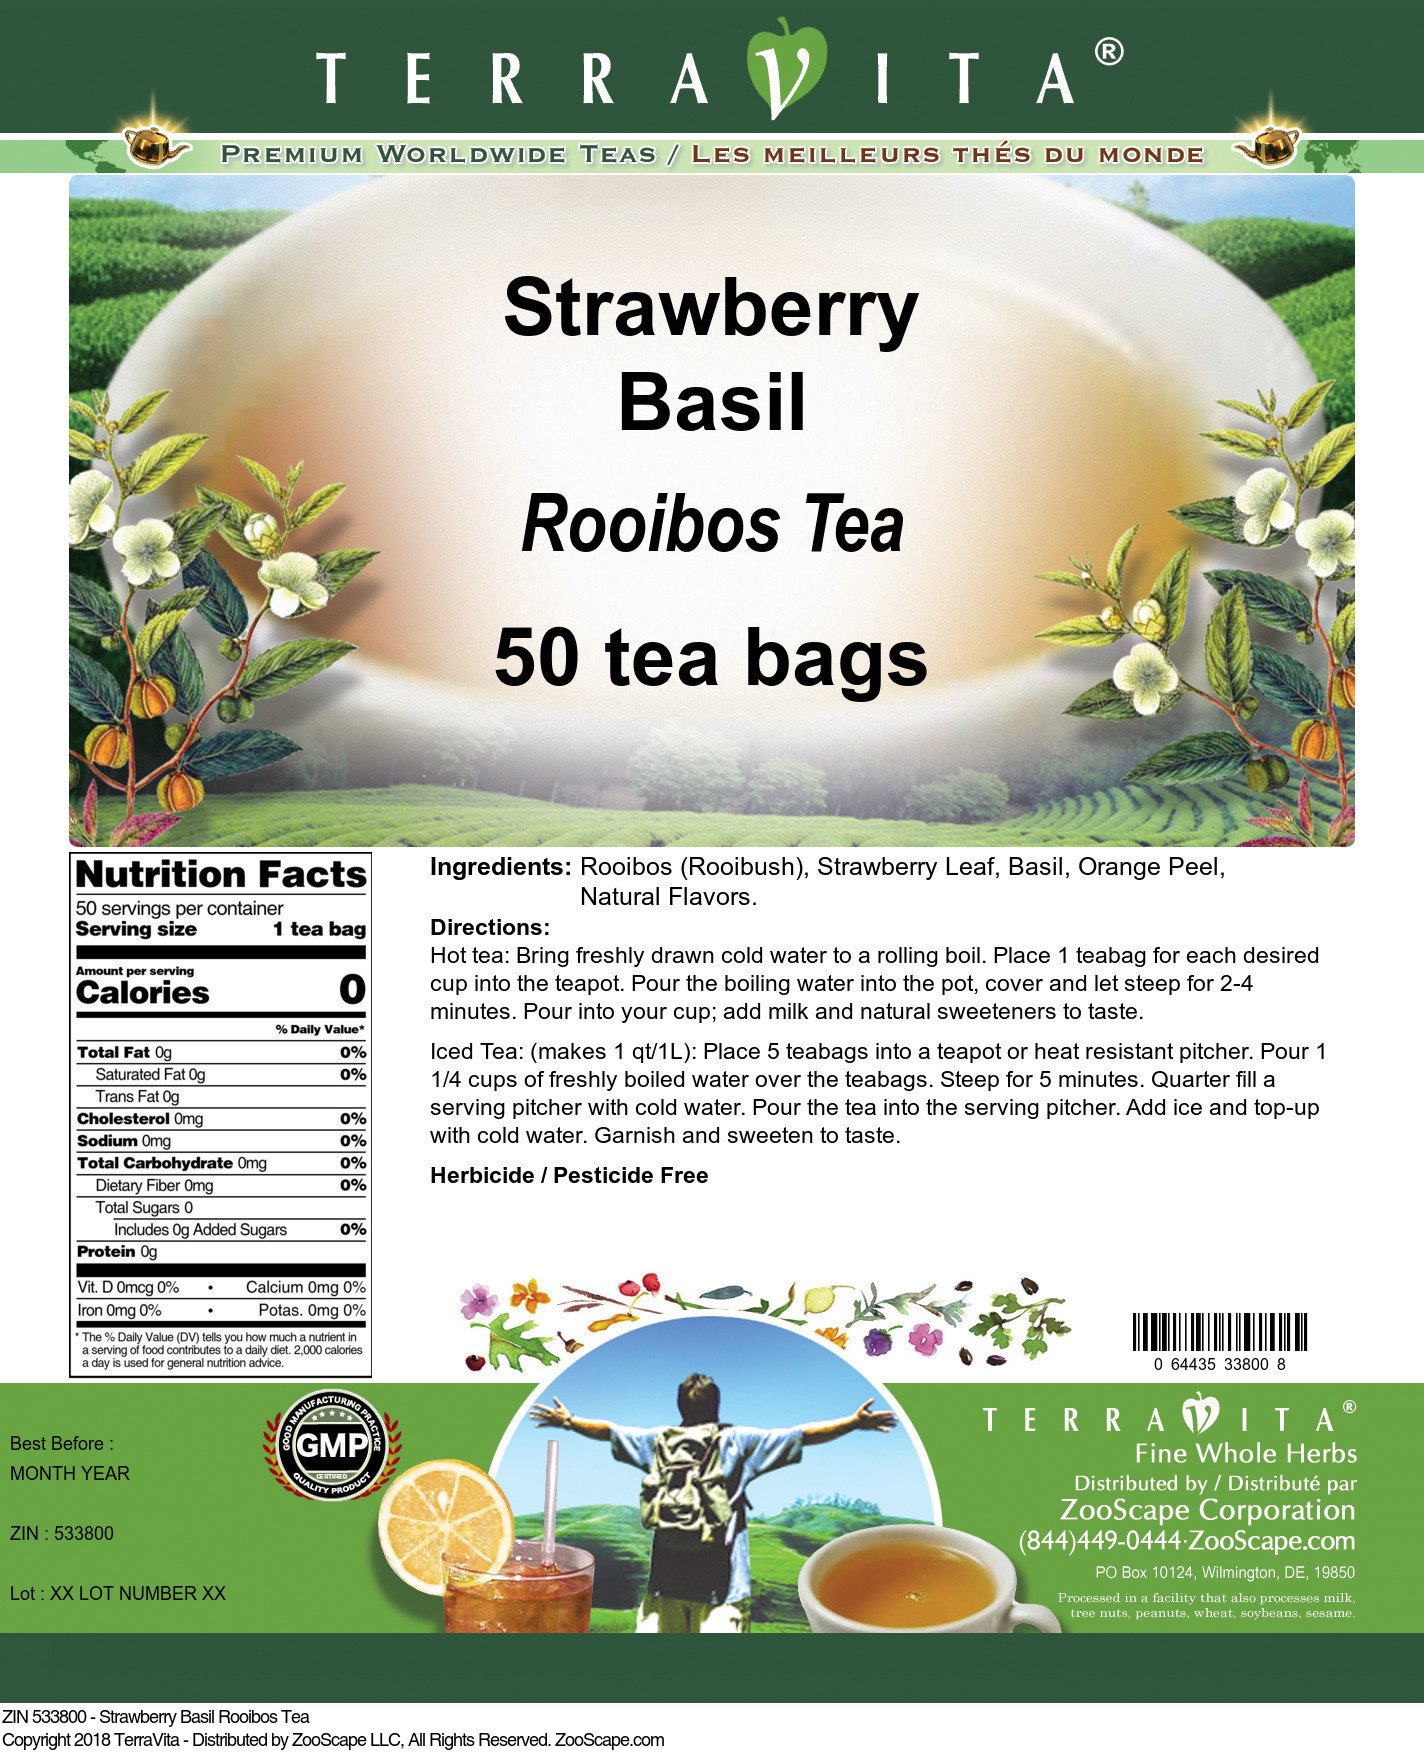 Strawberry Basil Rooibos Tea - Label